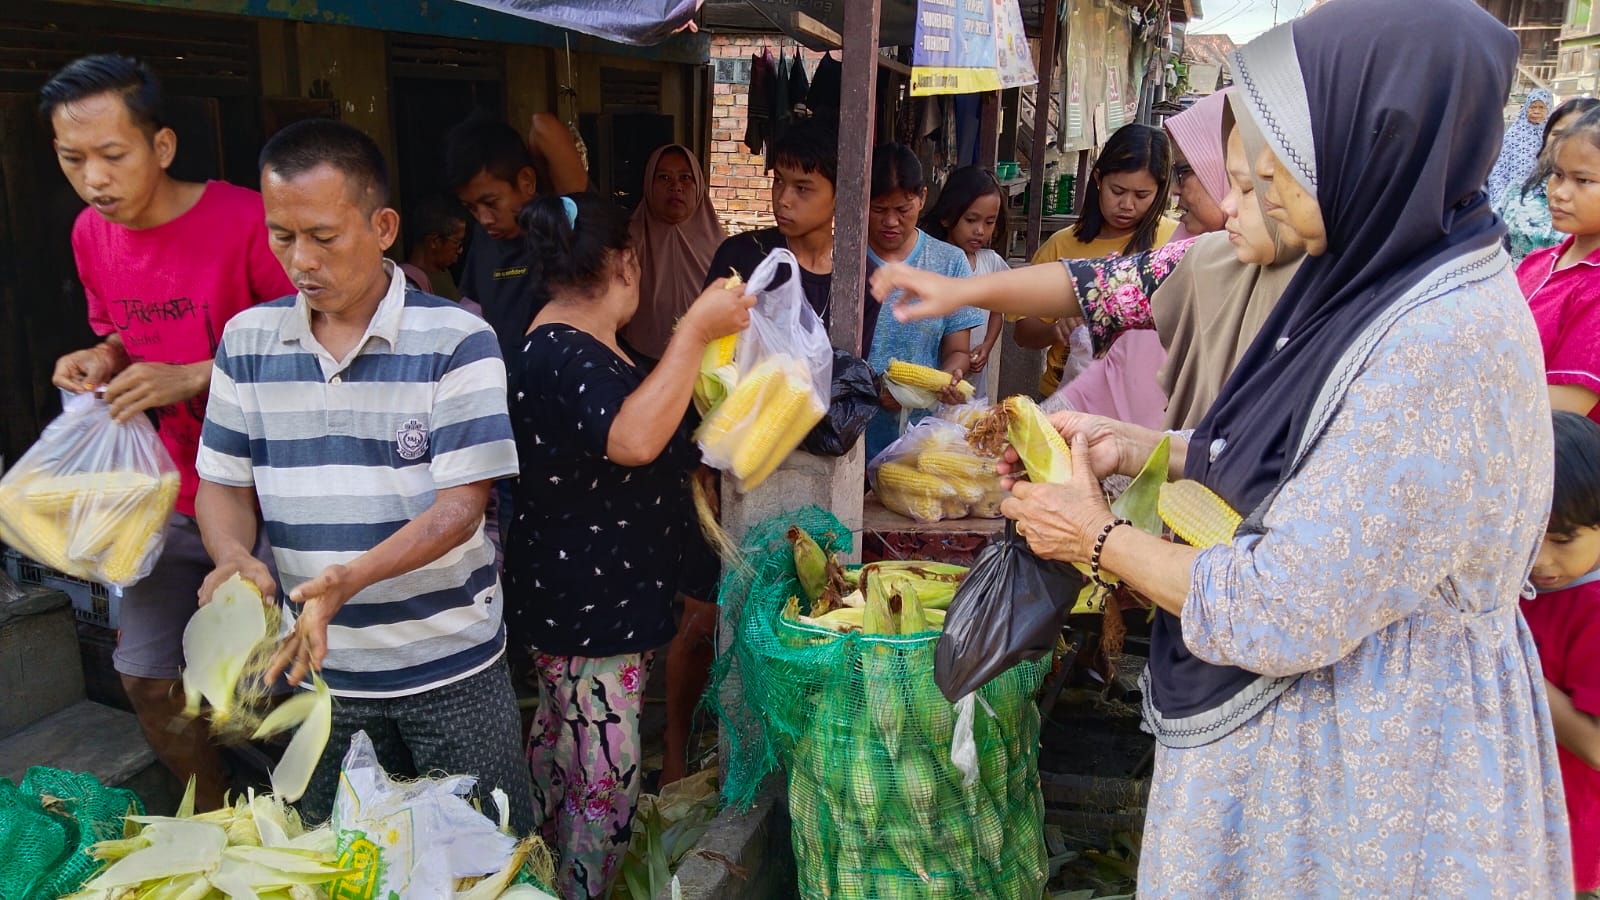 Jelang Perayaan Malam Tahun Baru, Pedagang Jagung di Ogan Ilir Laris Manis Diserbu Ibu-ibu